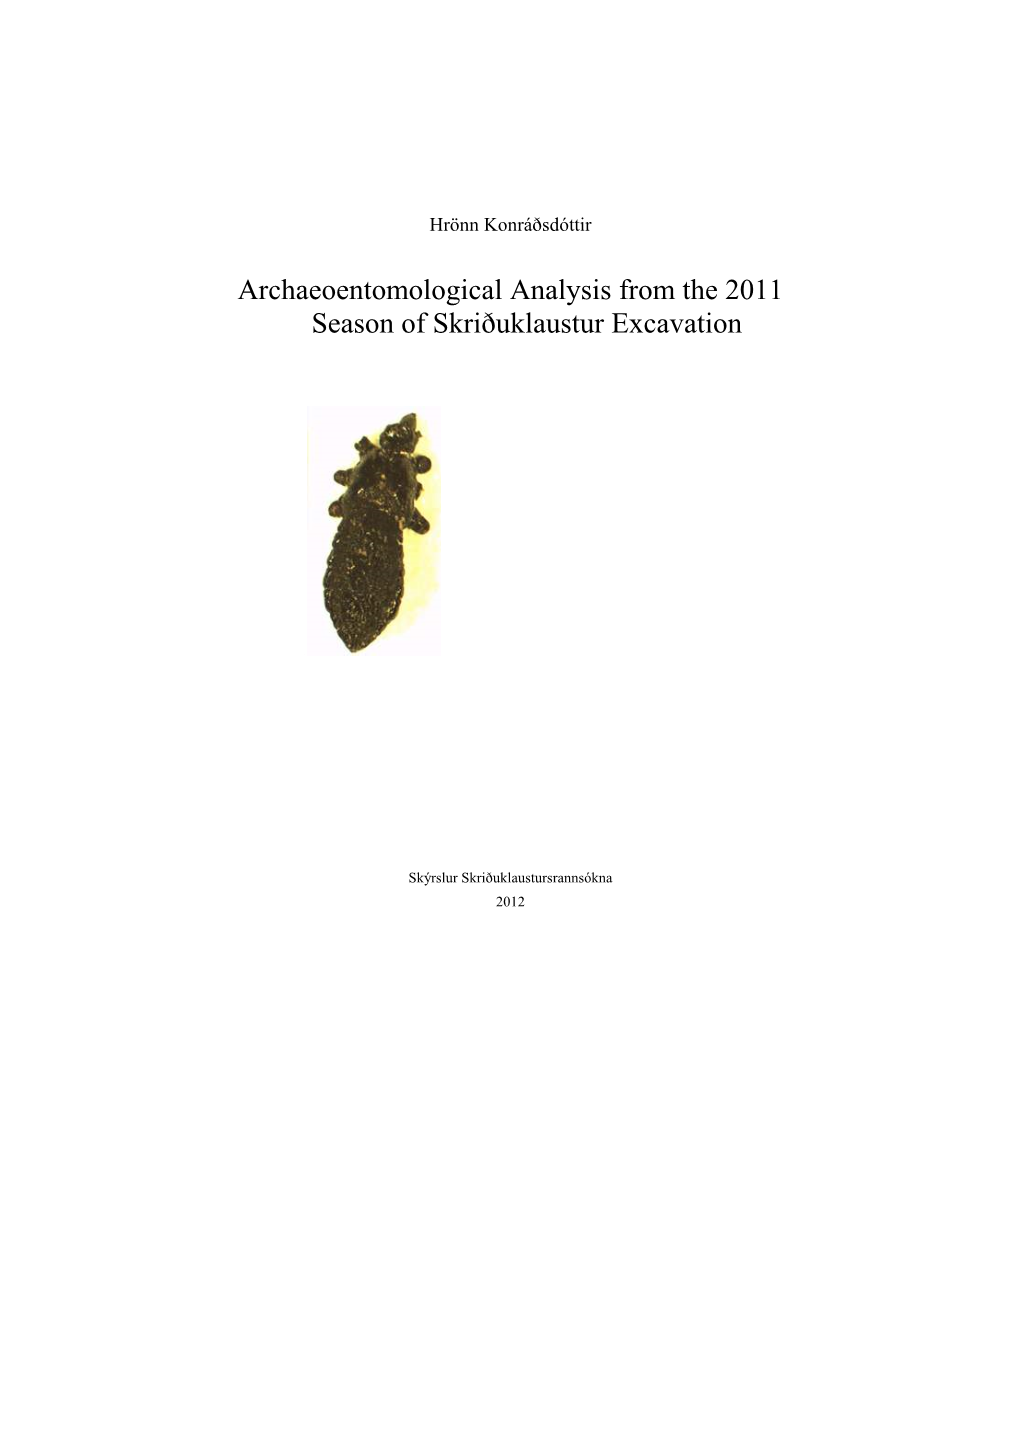 Archaeoentomological Analysis from the 2011 Season of Skriðuklaustur Excavation